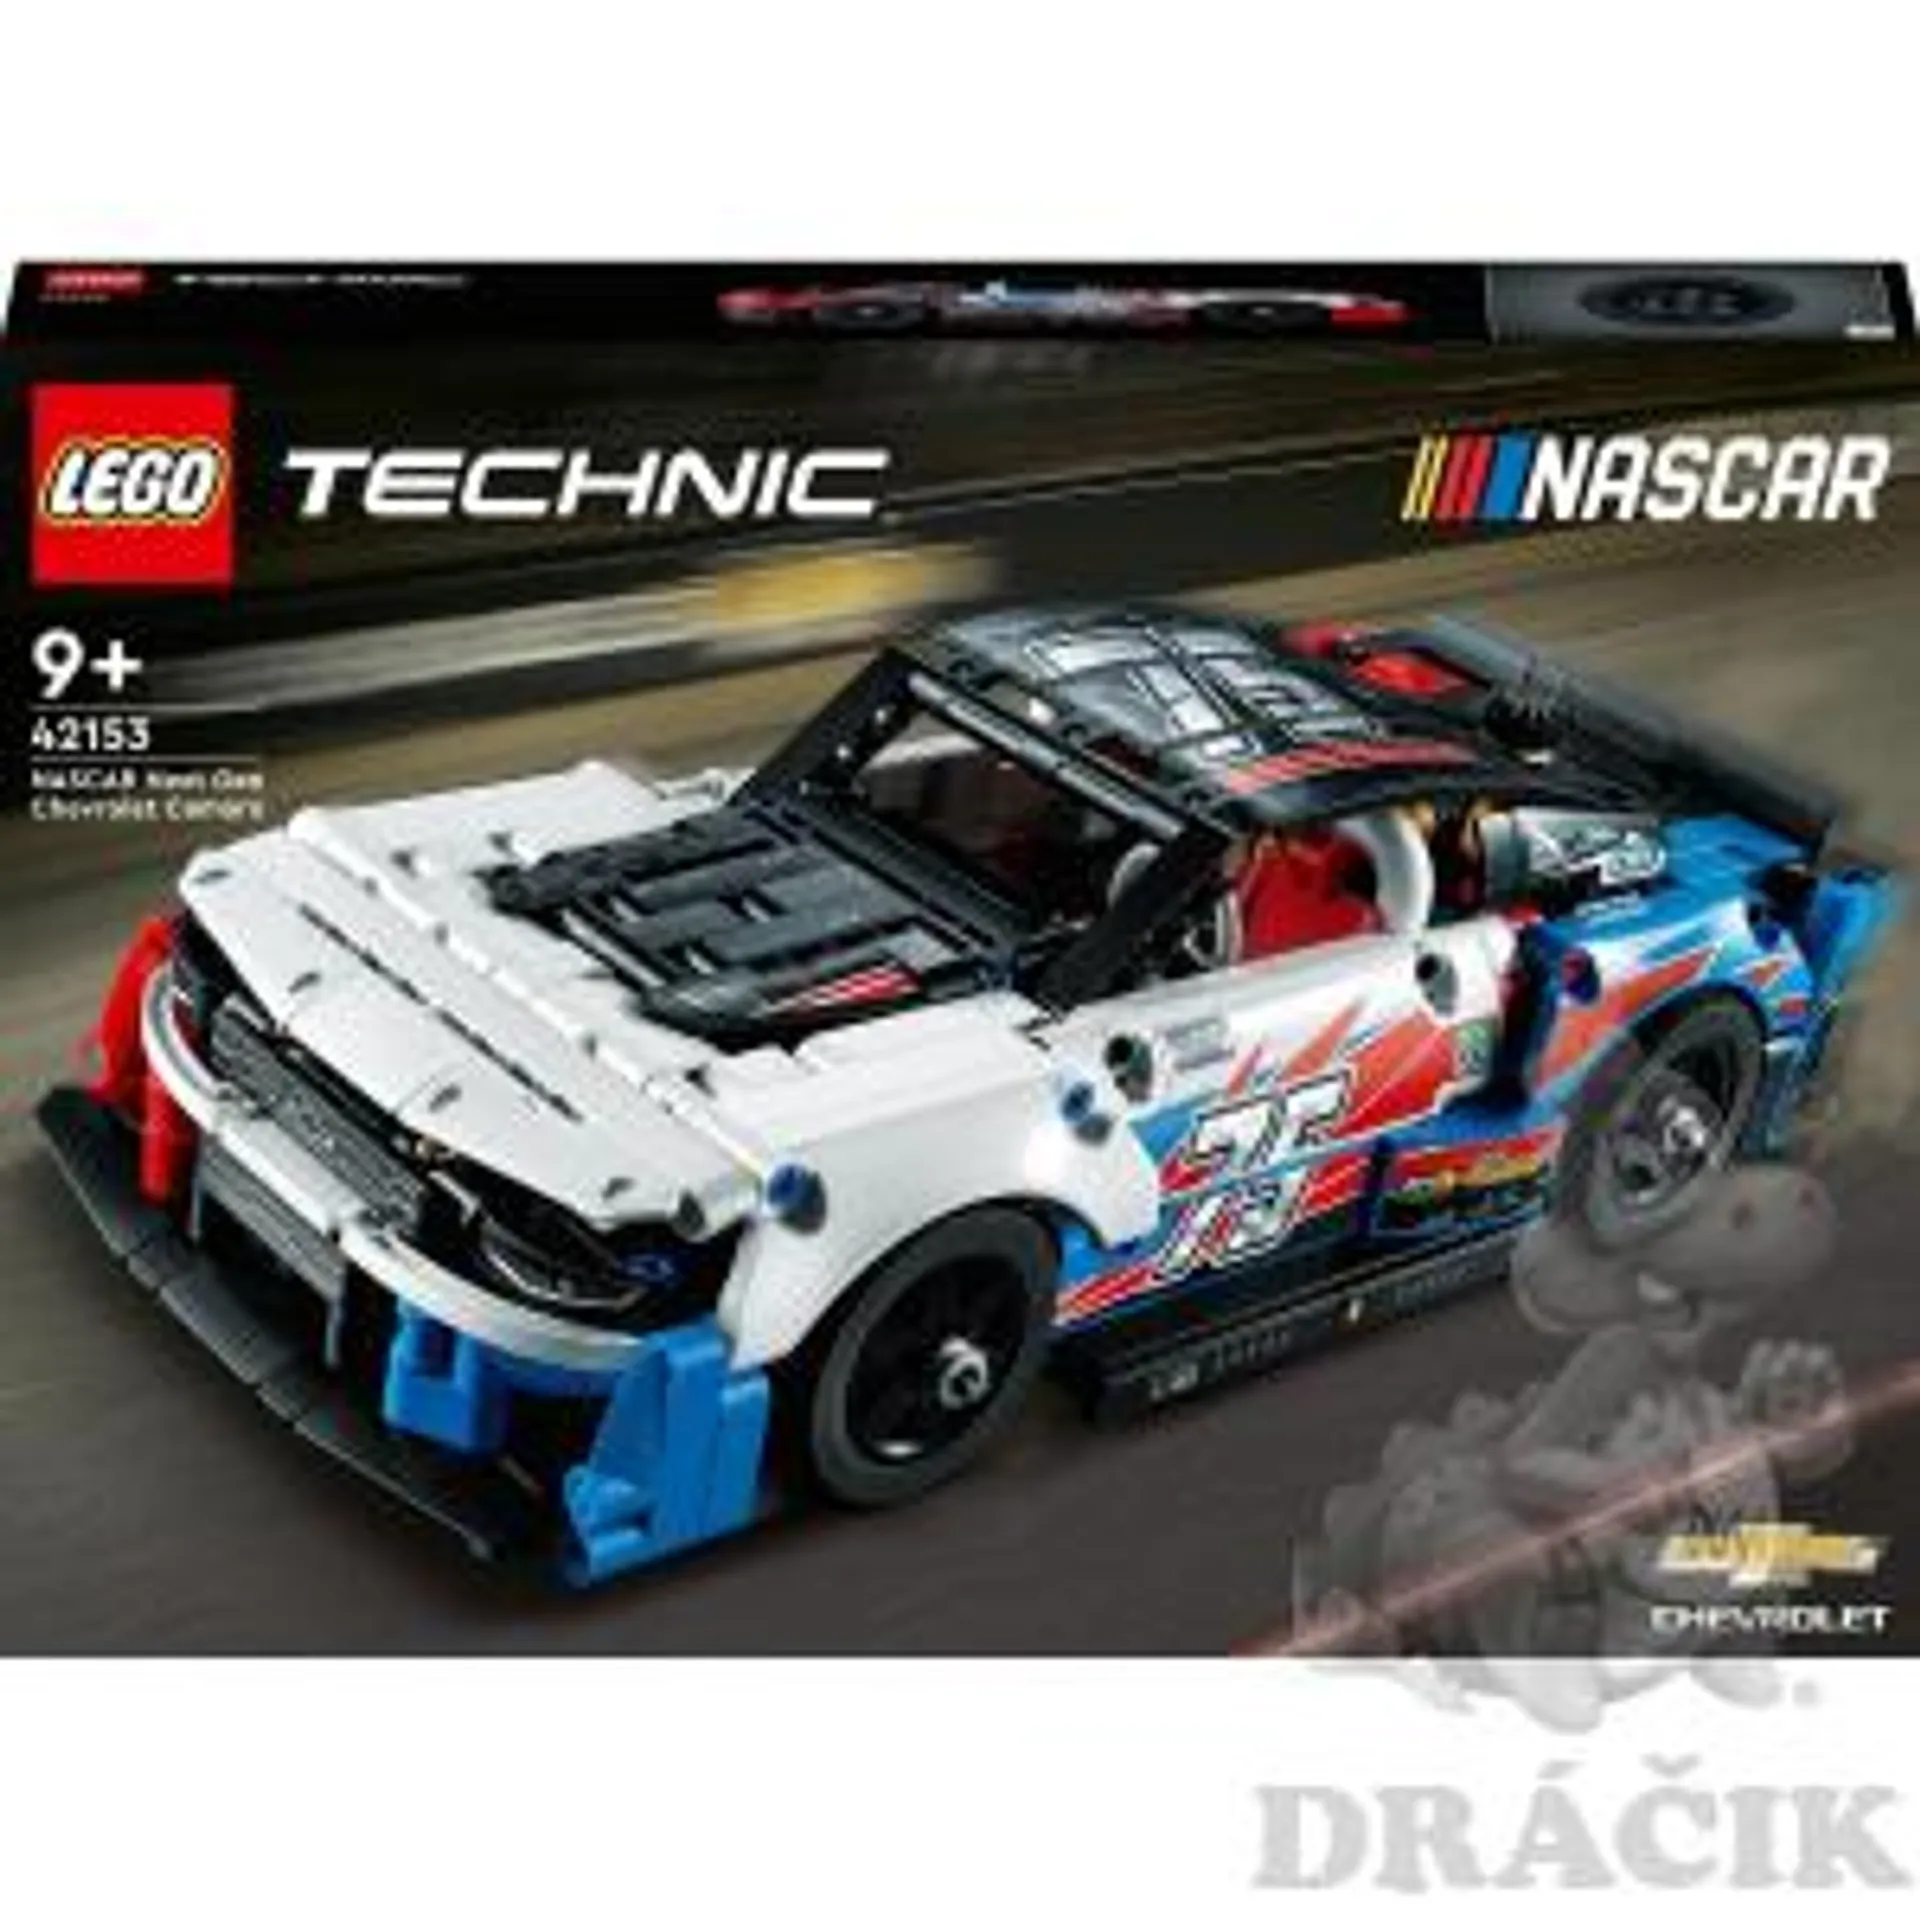 42153 Lego Technic- Nascar Next Gen Chevrlolet Camaro Zl1